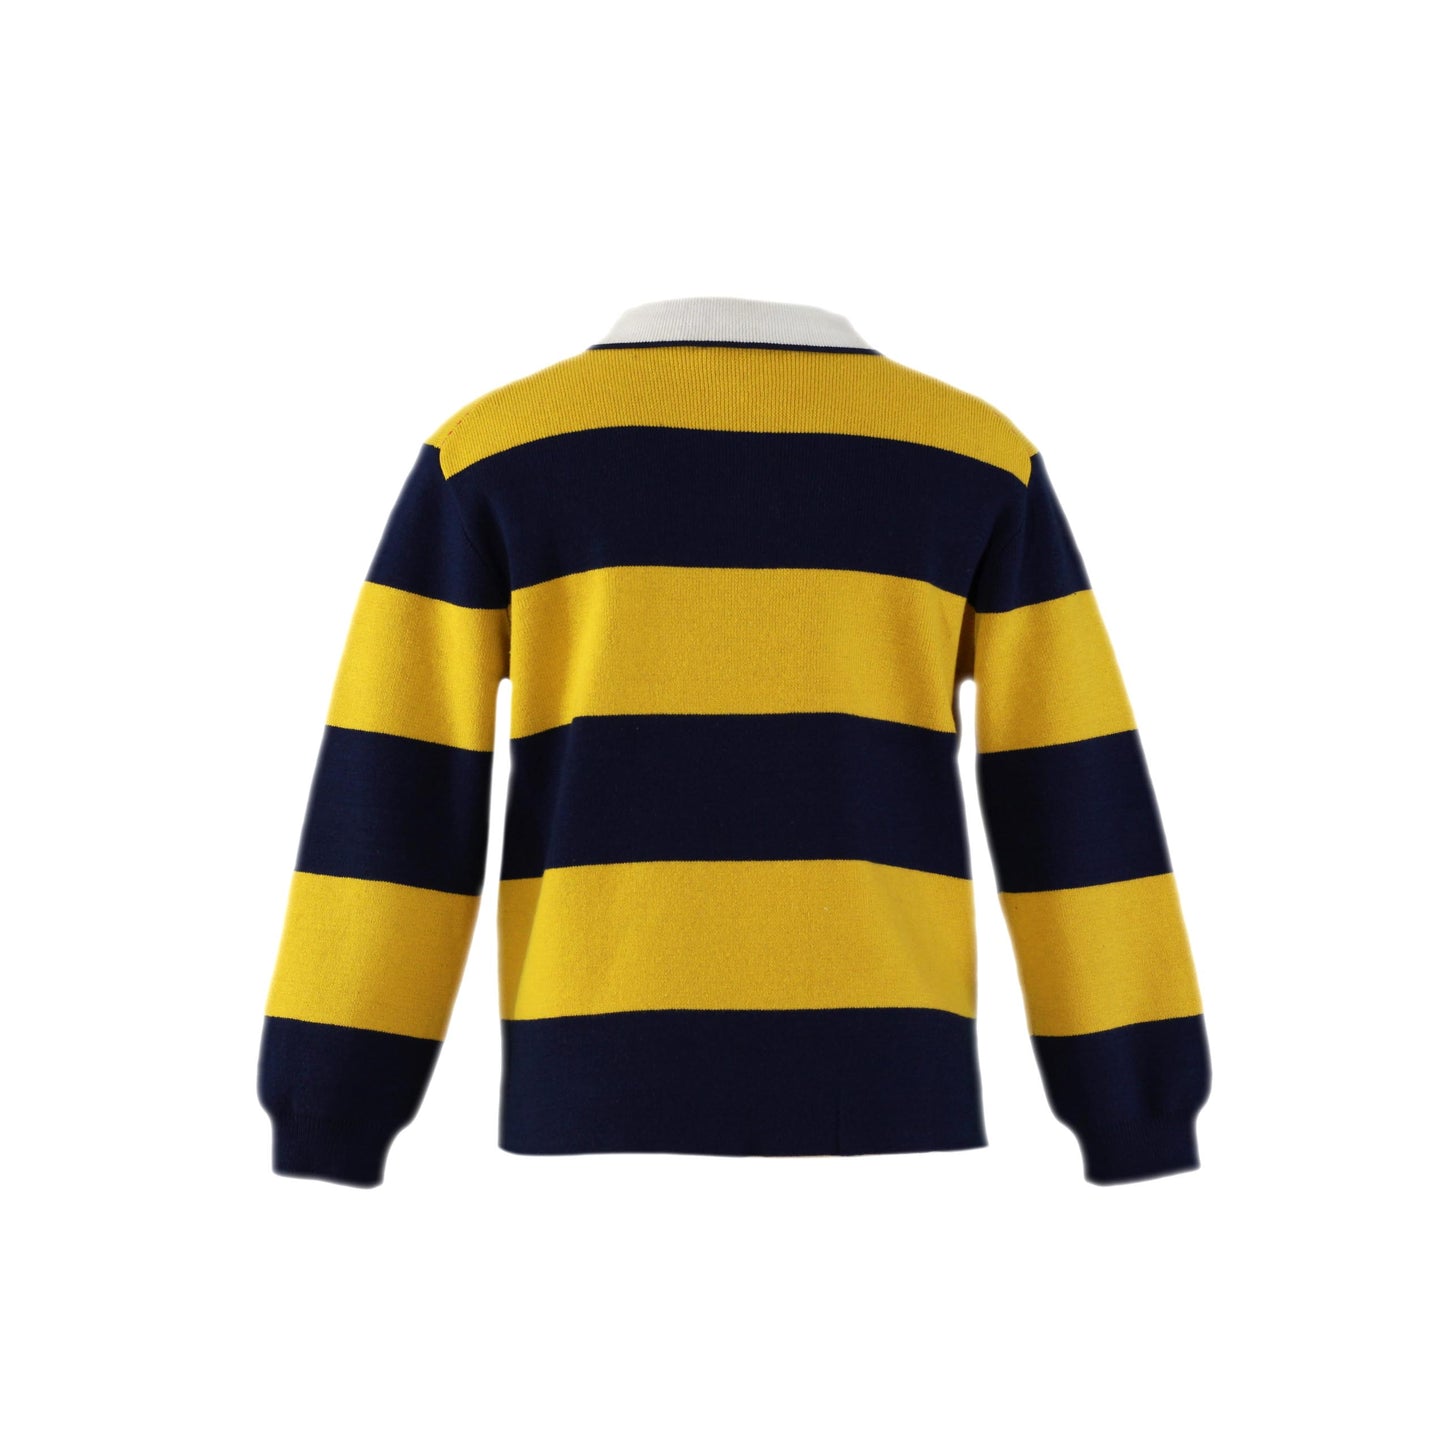 MIRANDA NEL BLUE Navy & Mustard Stripe Boys Knitted Polo Top - 1309